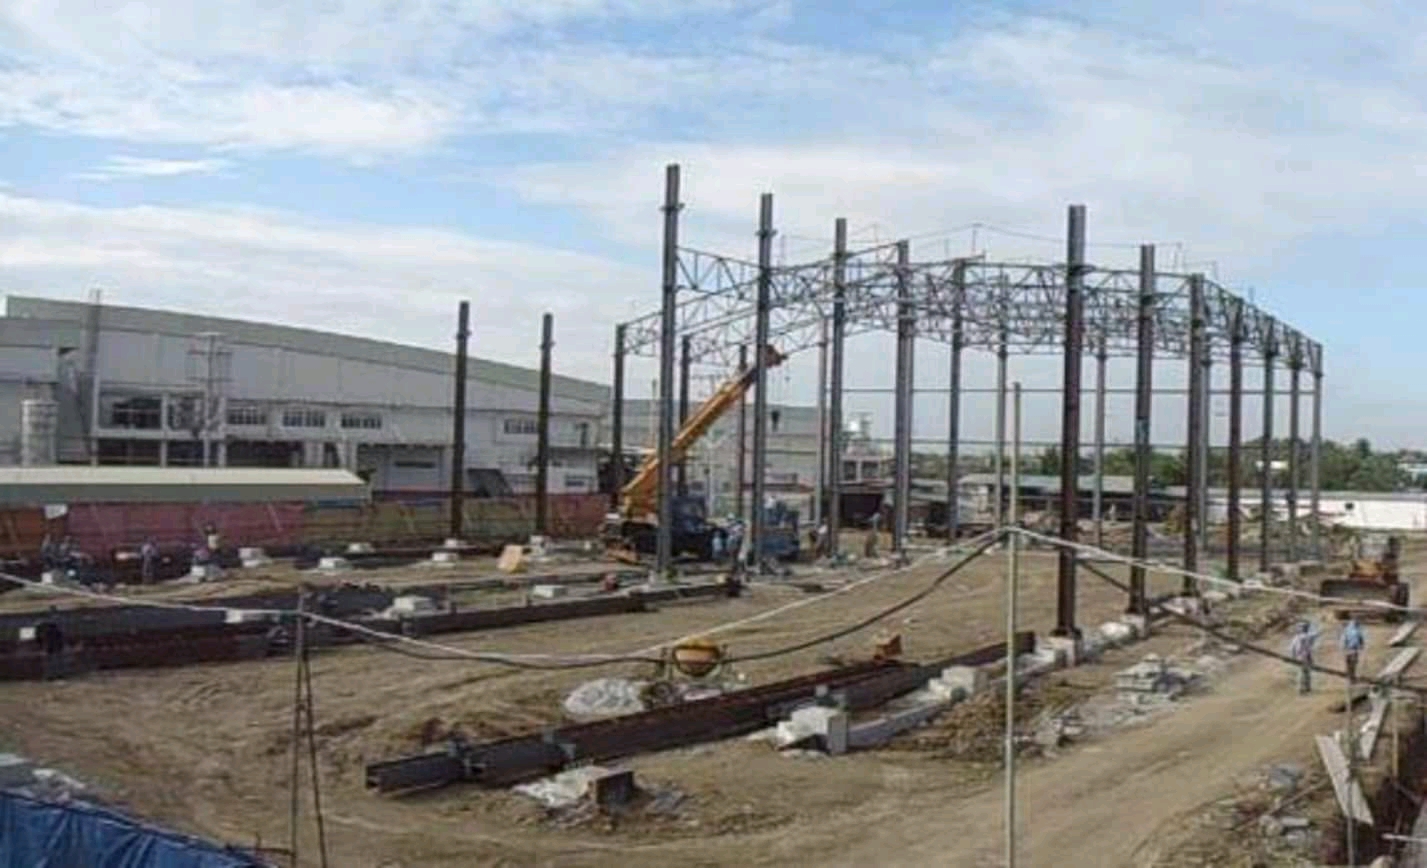 warehouse construction